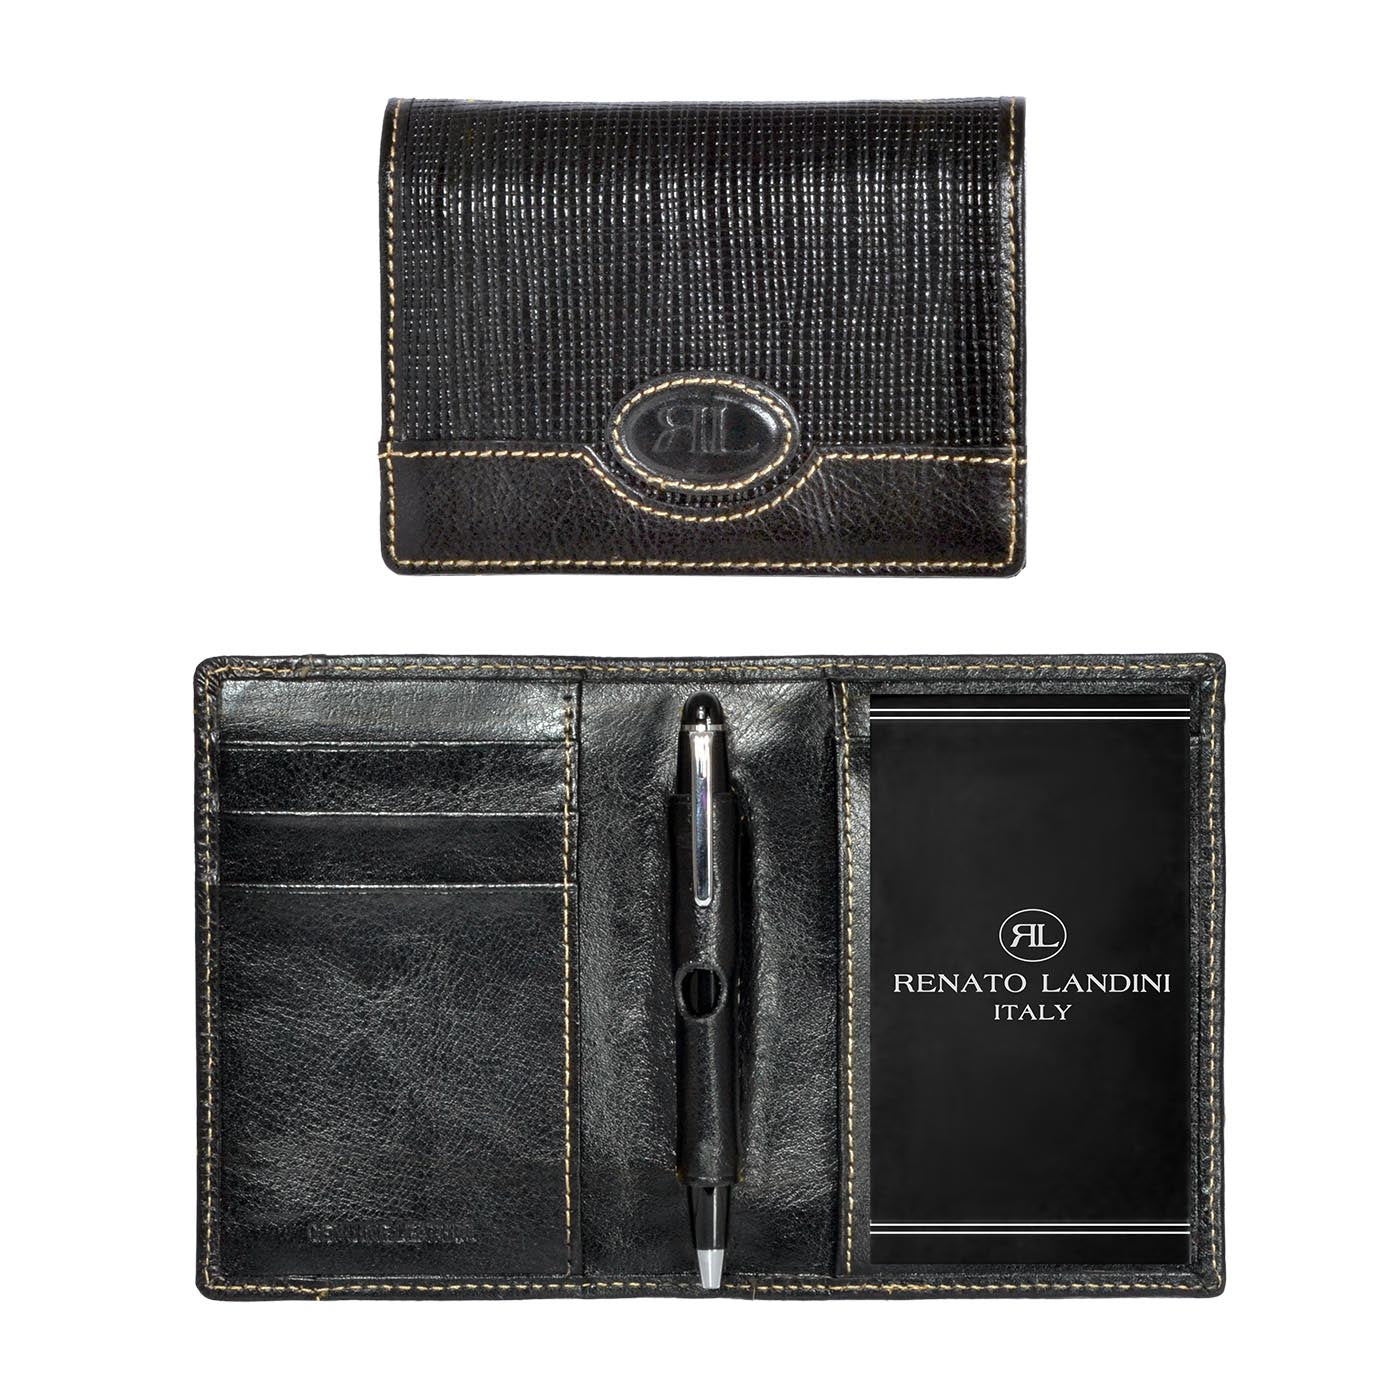 RENATO LANDINI Notepad Holder With Pen/ Fantasy